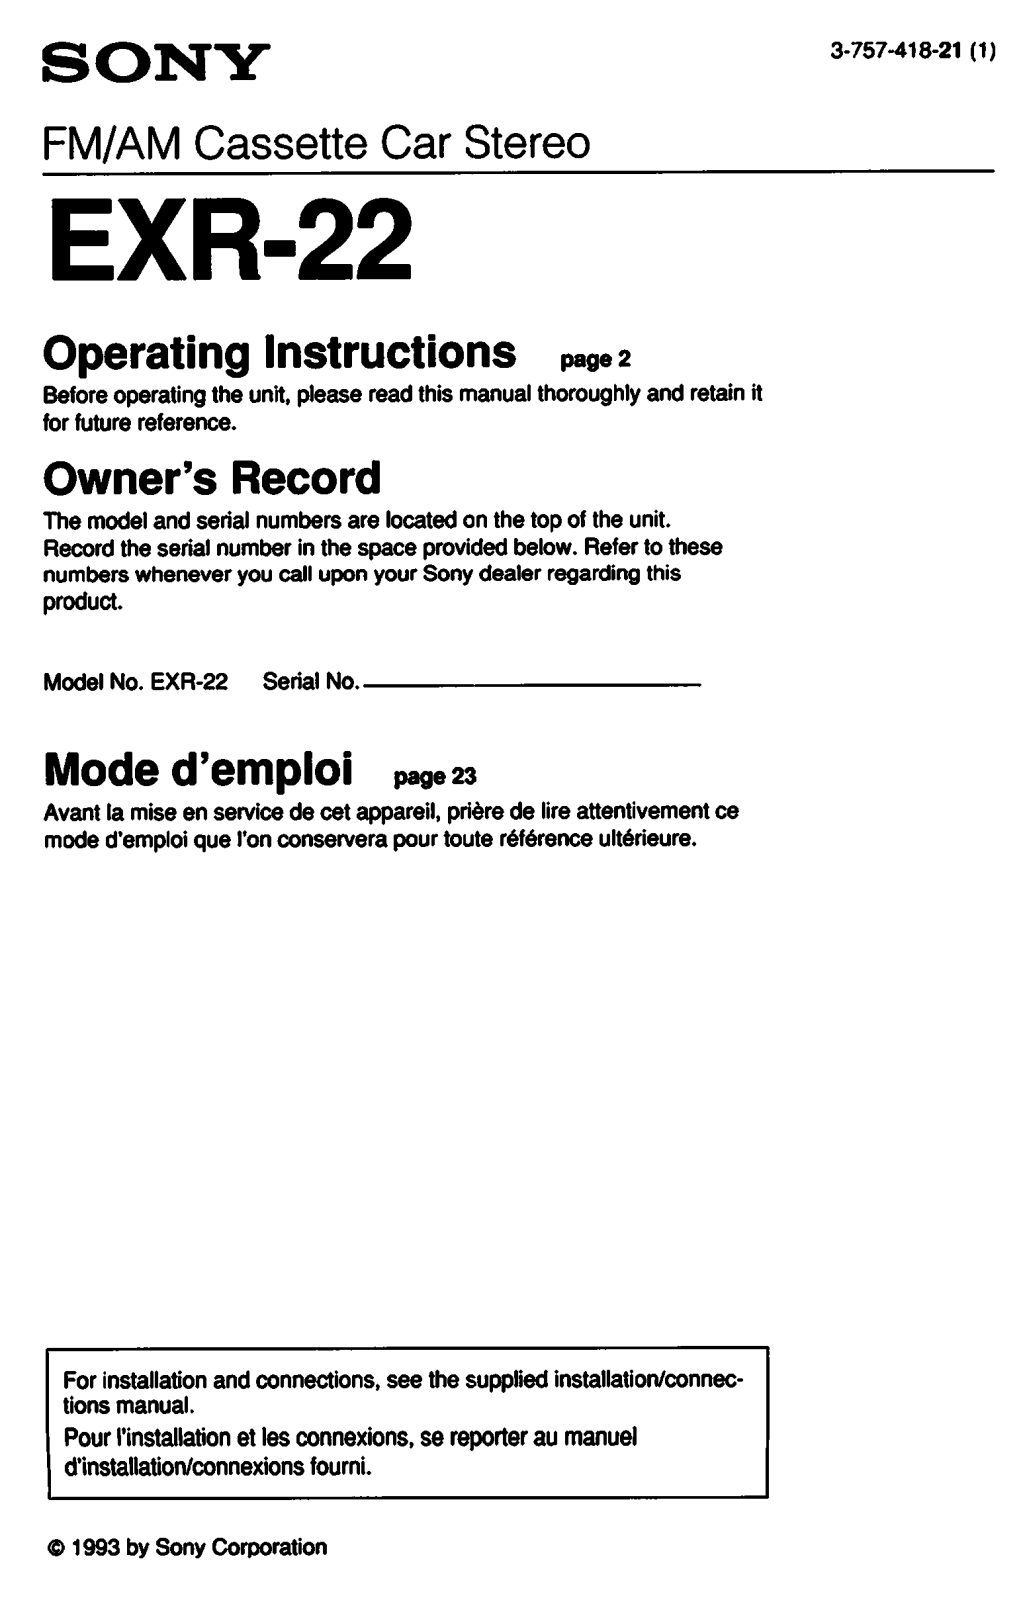 Sony EXR-22 Operating Manual